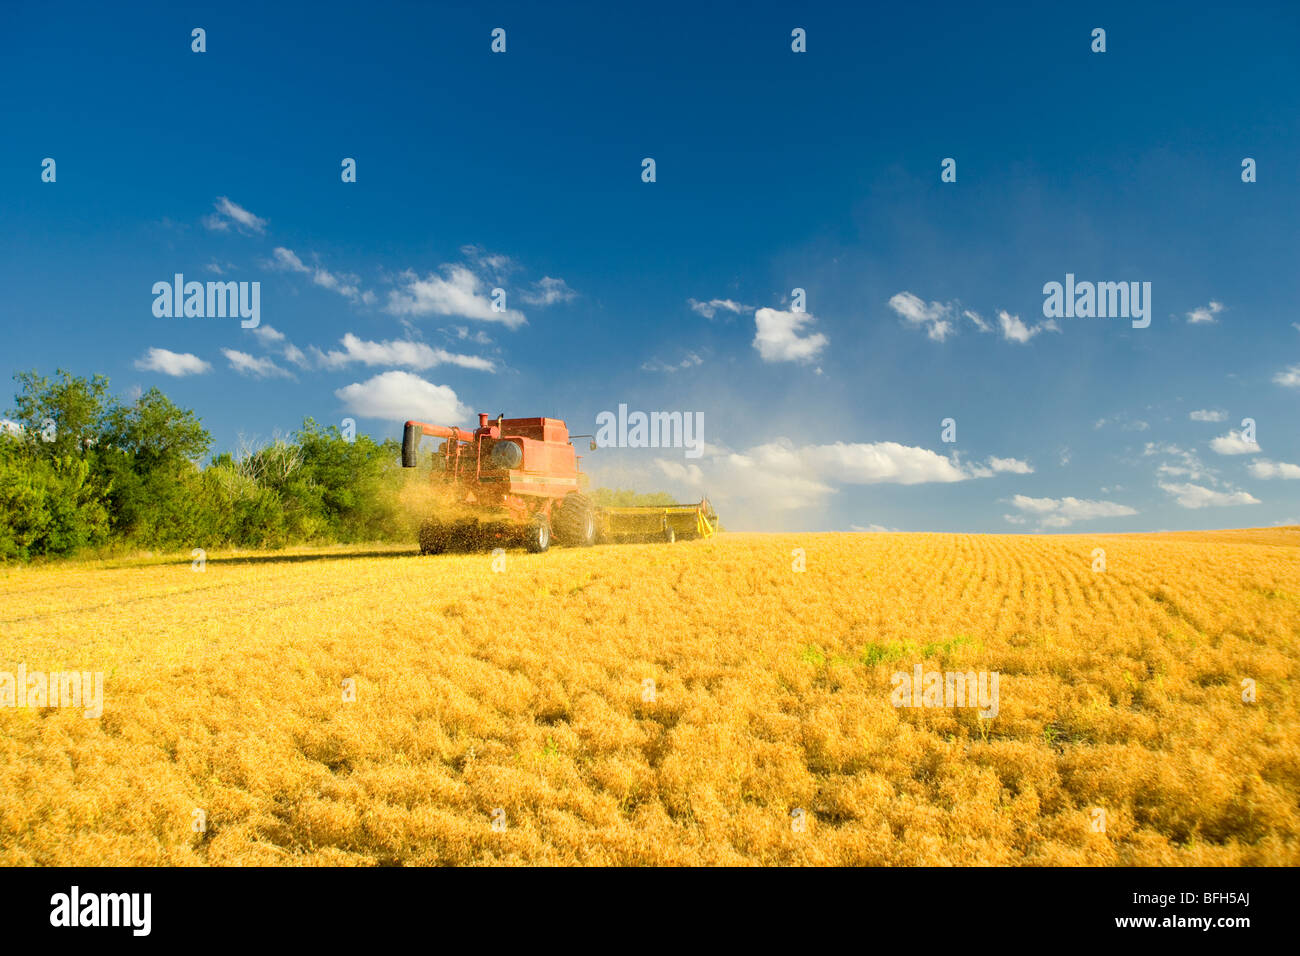 Harvesting lentils, Vanguard, Saskatchewan, Canada Stock Photo